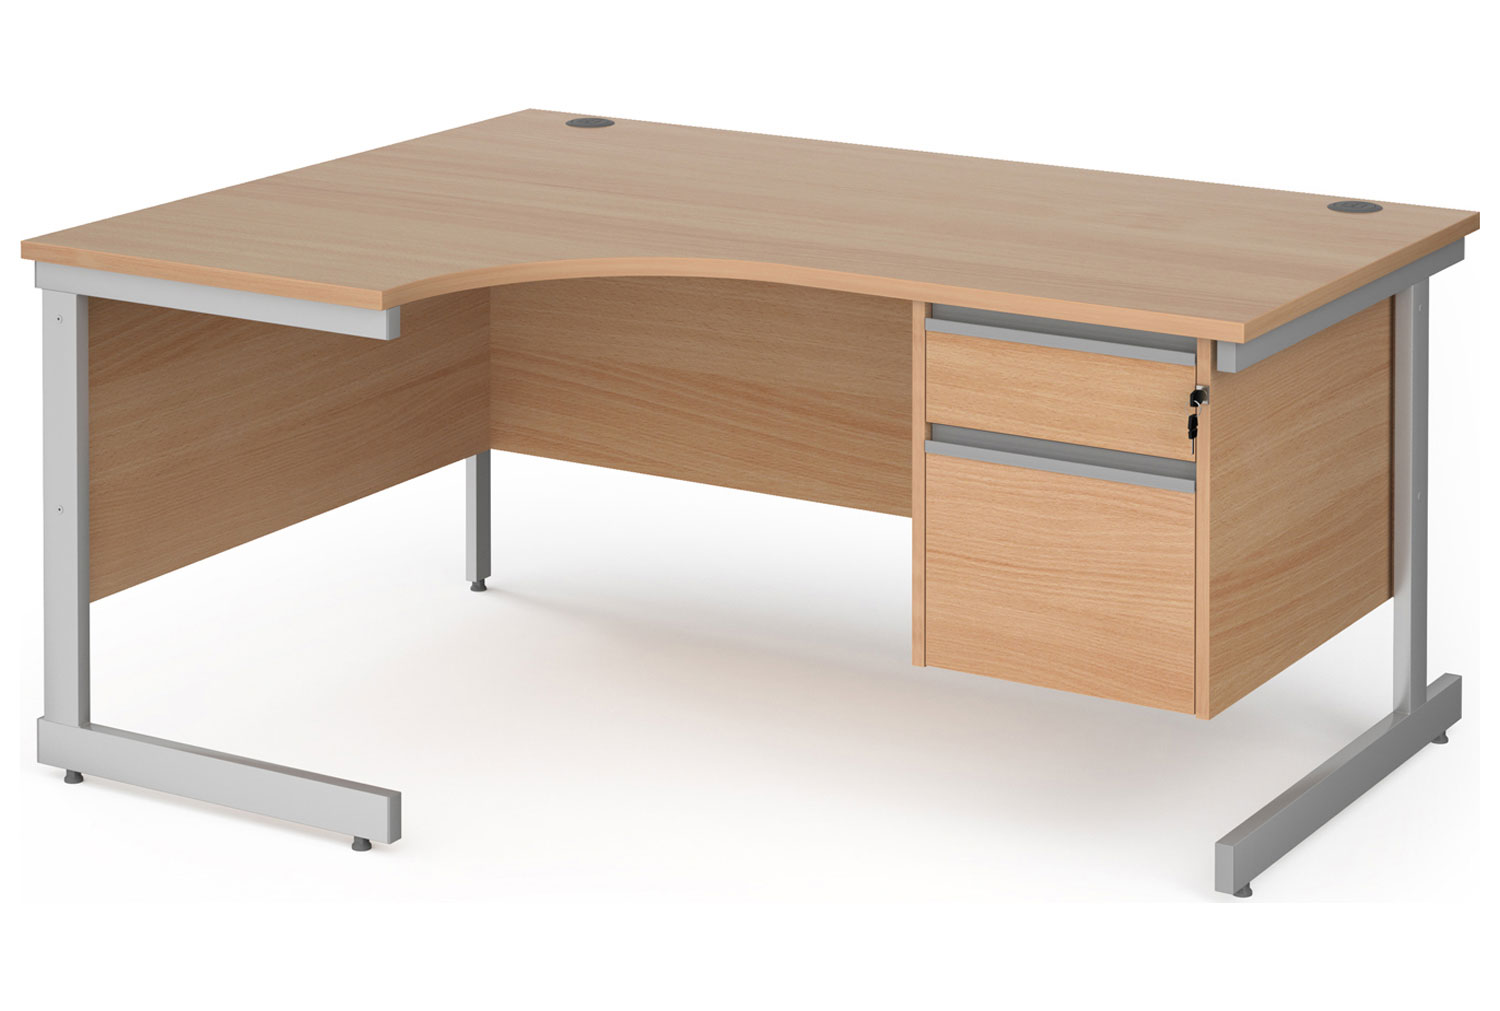 Value Line Classic+ C-Leg Left Ergo Office Desk 2 Drawers (Silver Leg), 160wx120/80dx73h (cm), Beech